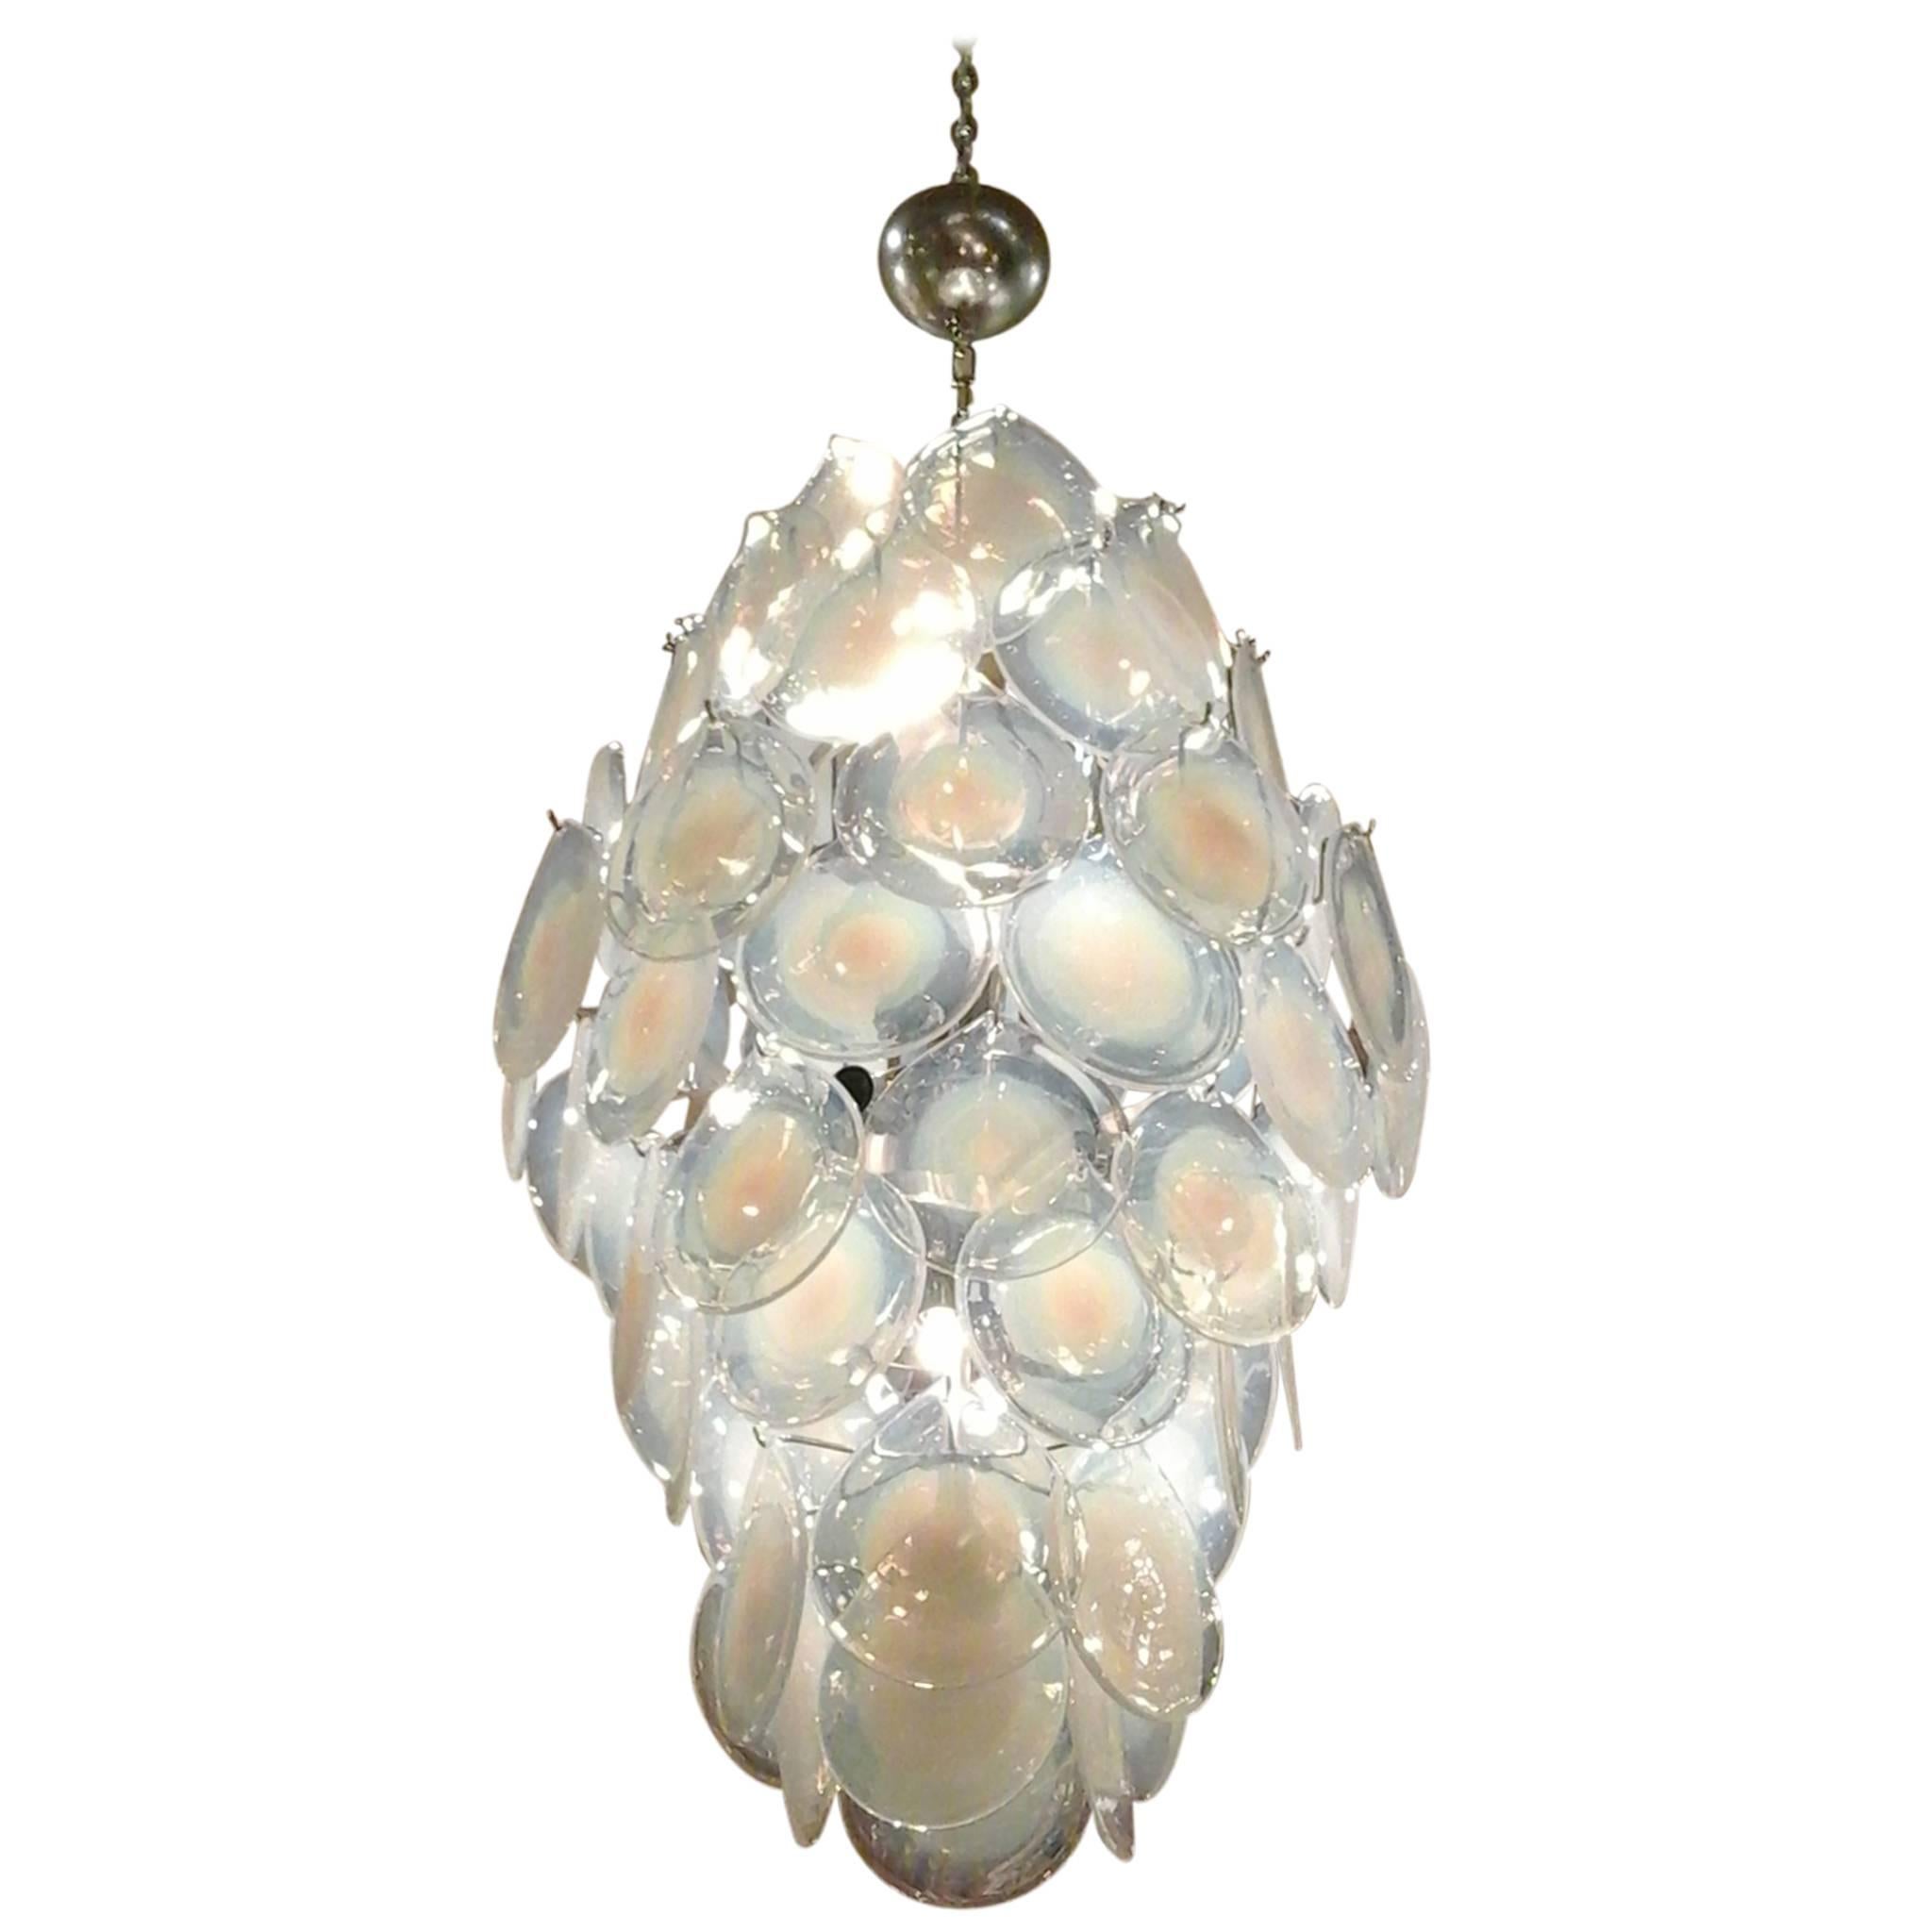 Opaline glass chandelier from Vistosi in 1970.